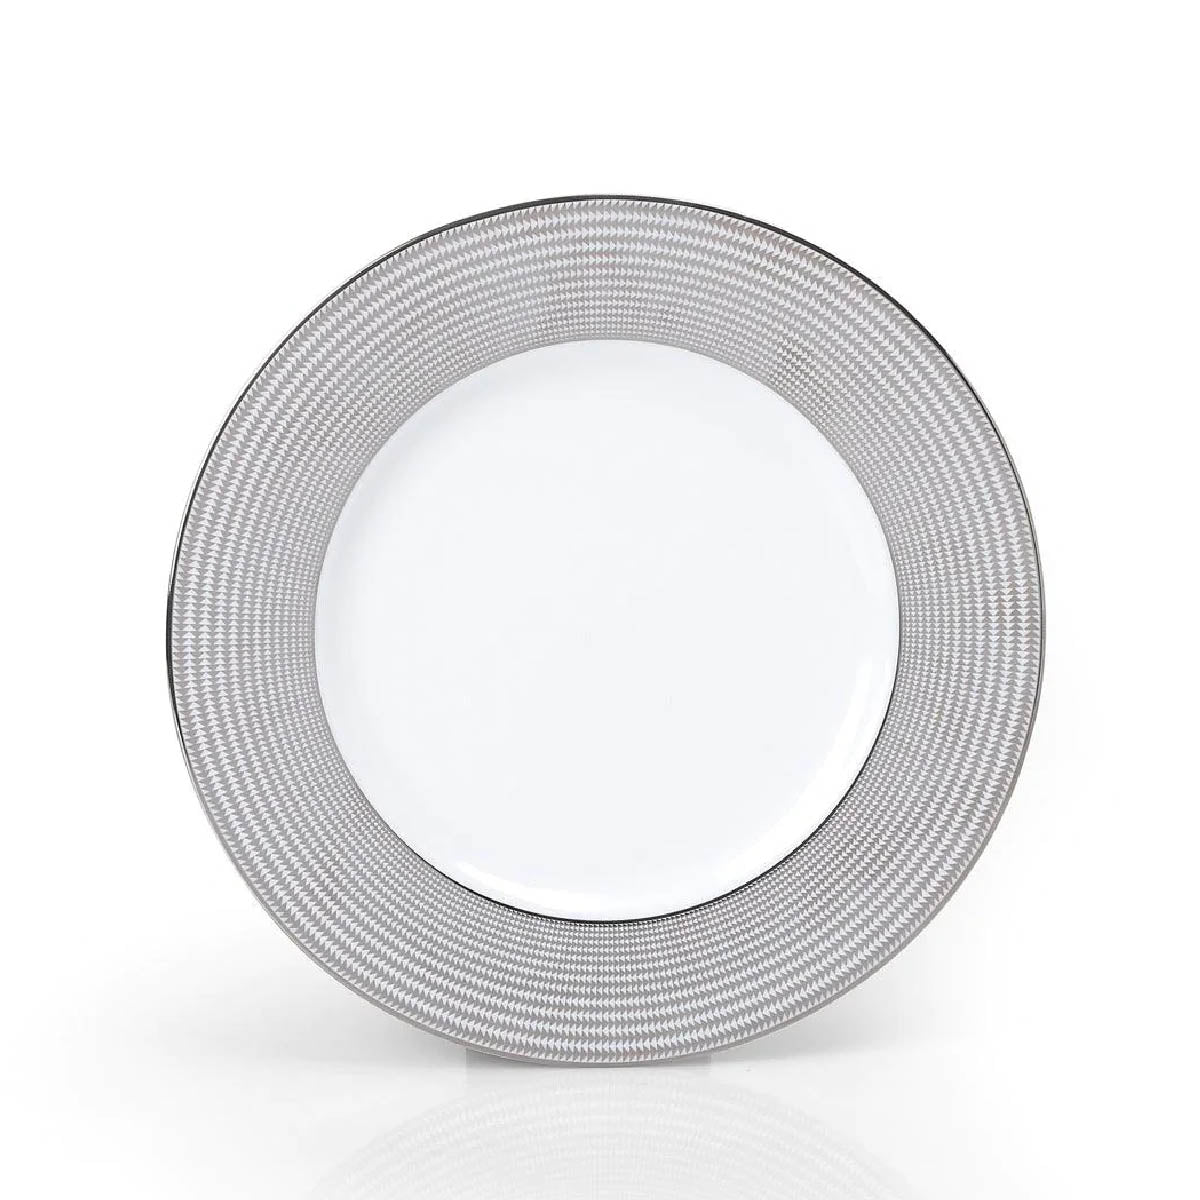 Platina Silver Dinner Plate